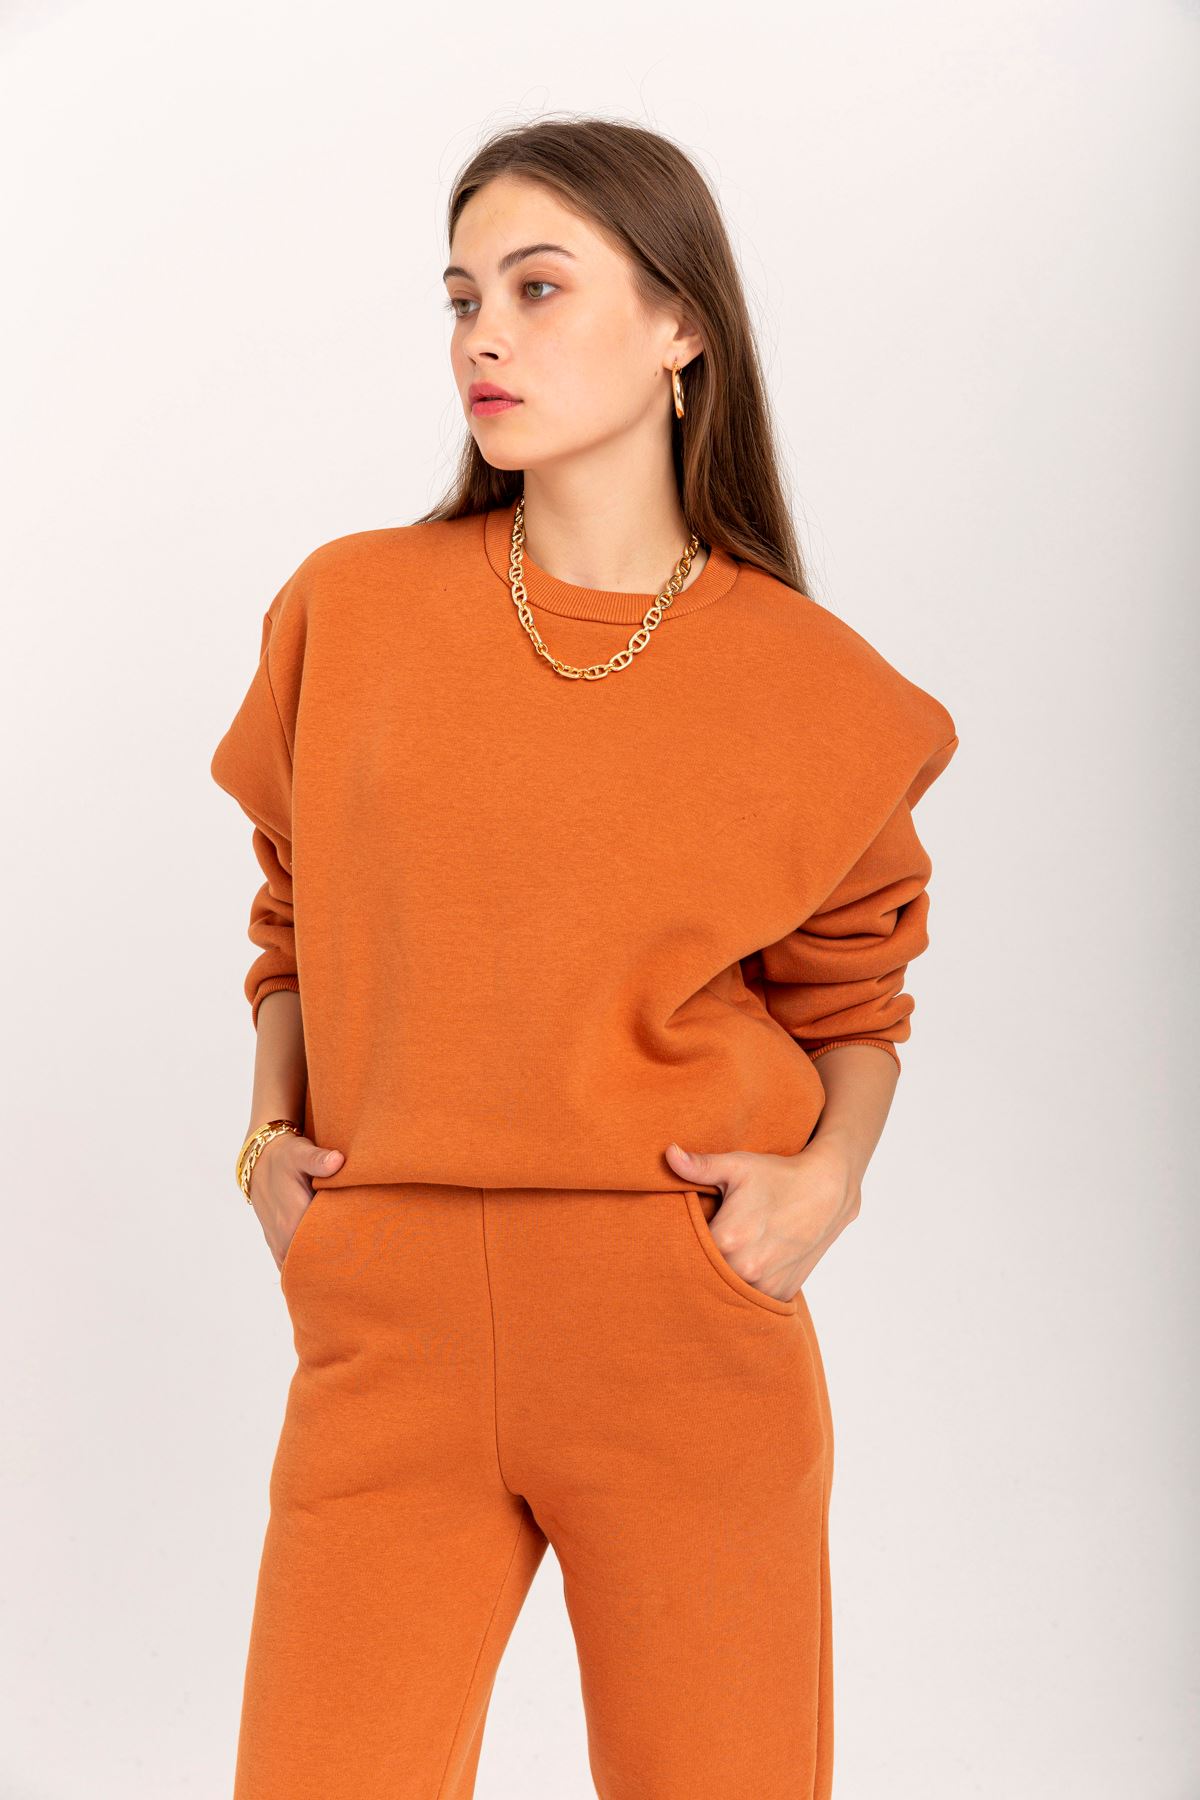 Third Knit With Wool İnside Fabric Long Sleeve Below Hip Women Sweatshirt - Cinnamon 